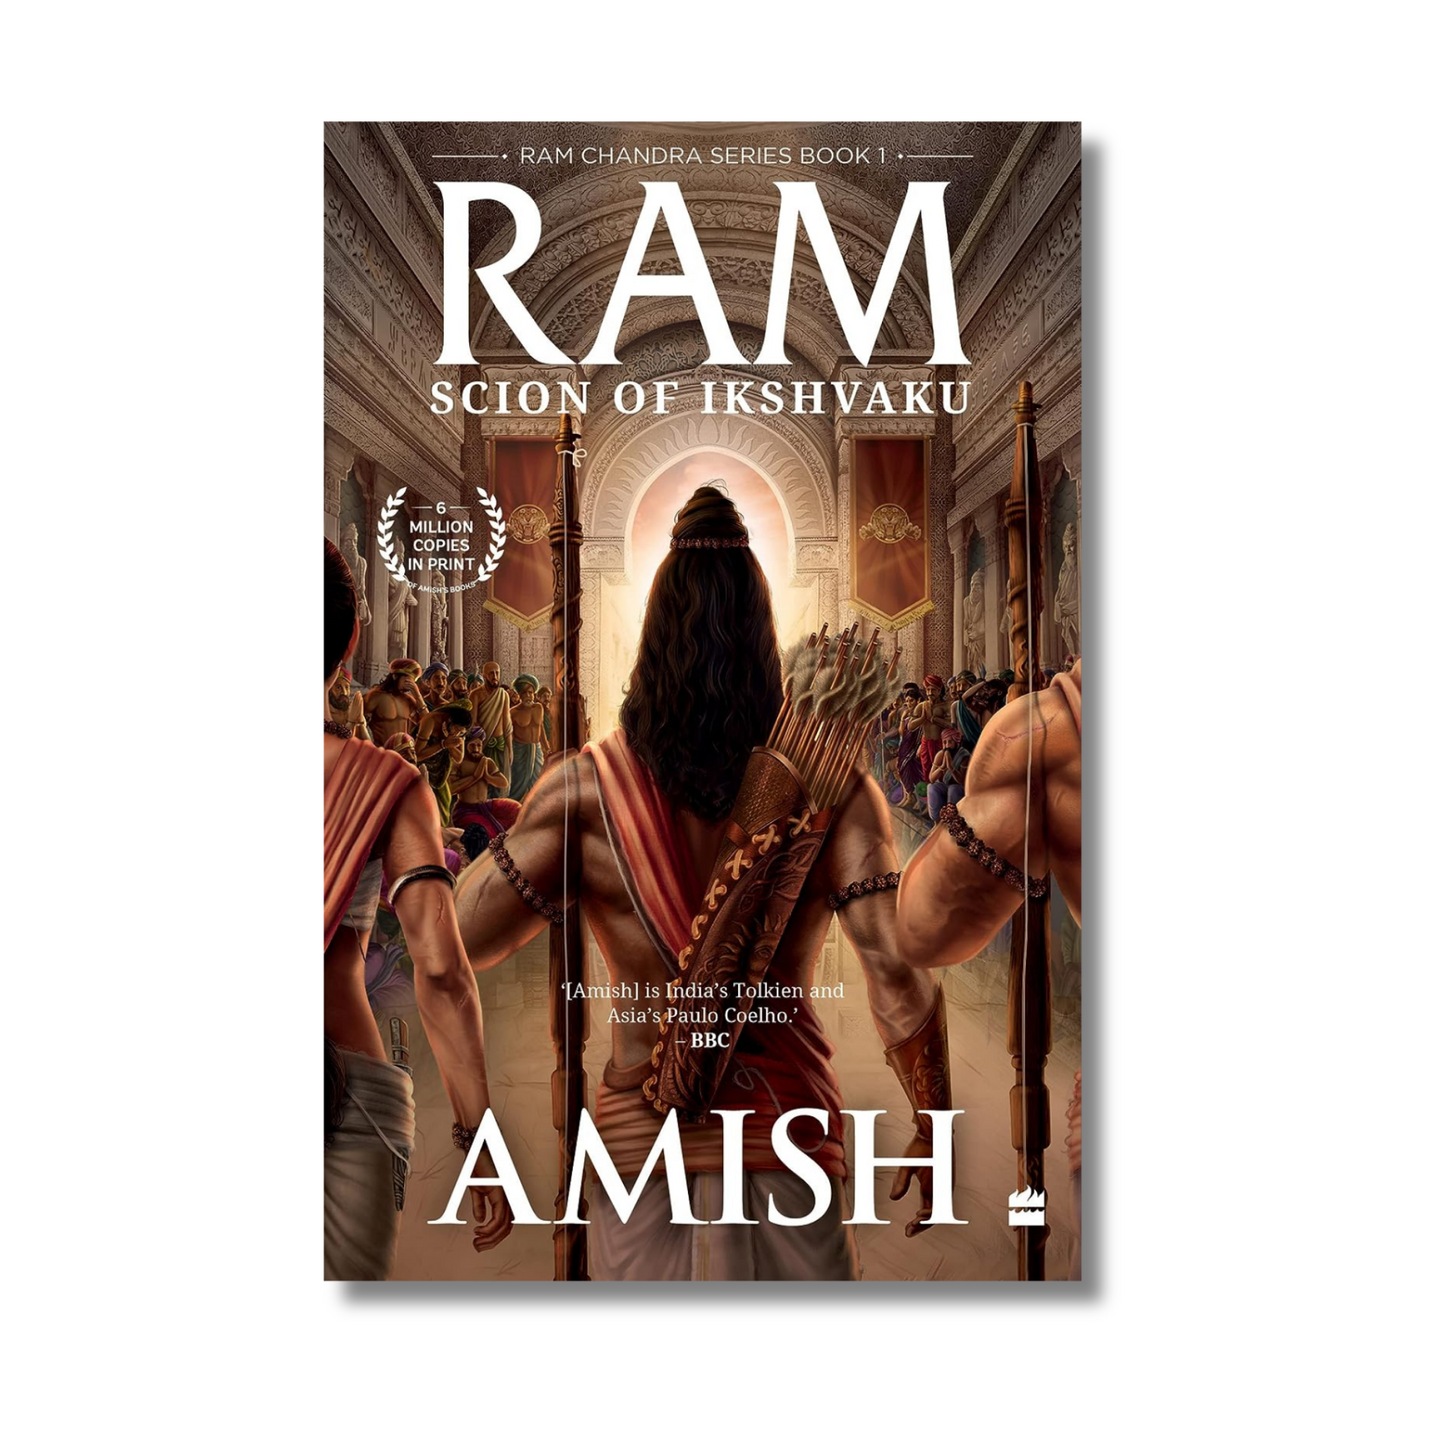 Ram - Scion of Ikshvaku (Ram Chandra series book -1) By Amish (Paperback)